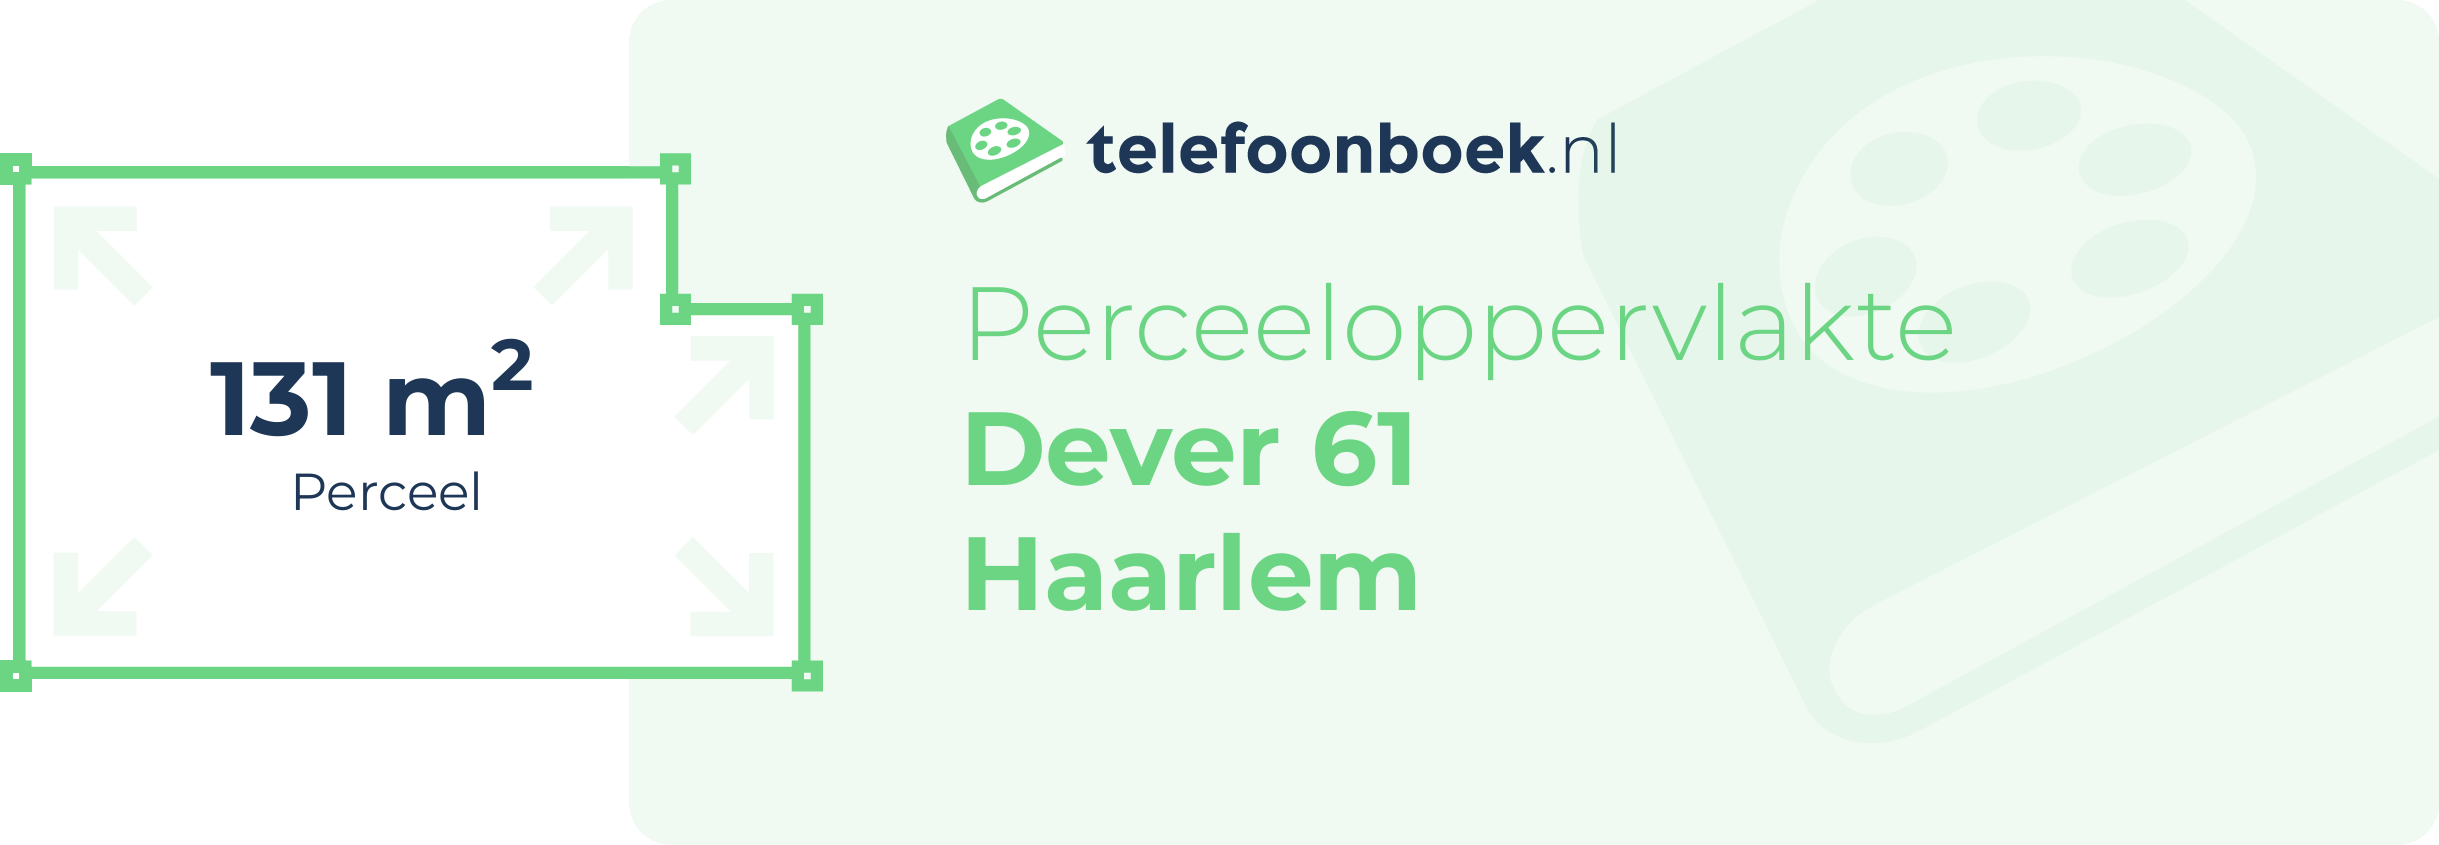 Perceeloppervlakte Dever 61 Haarlem